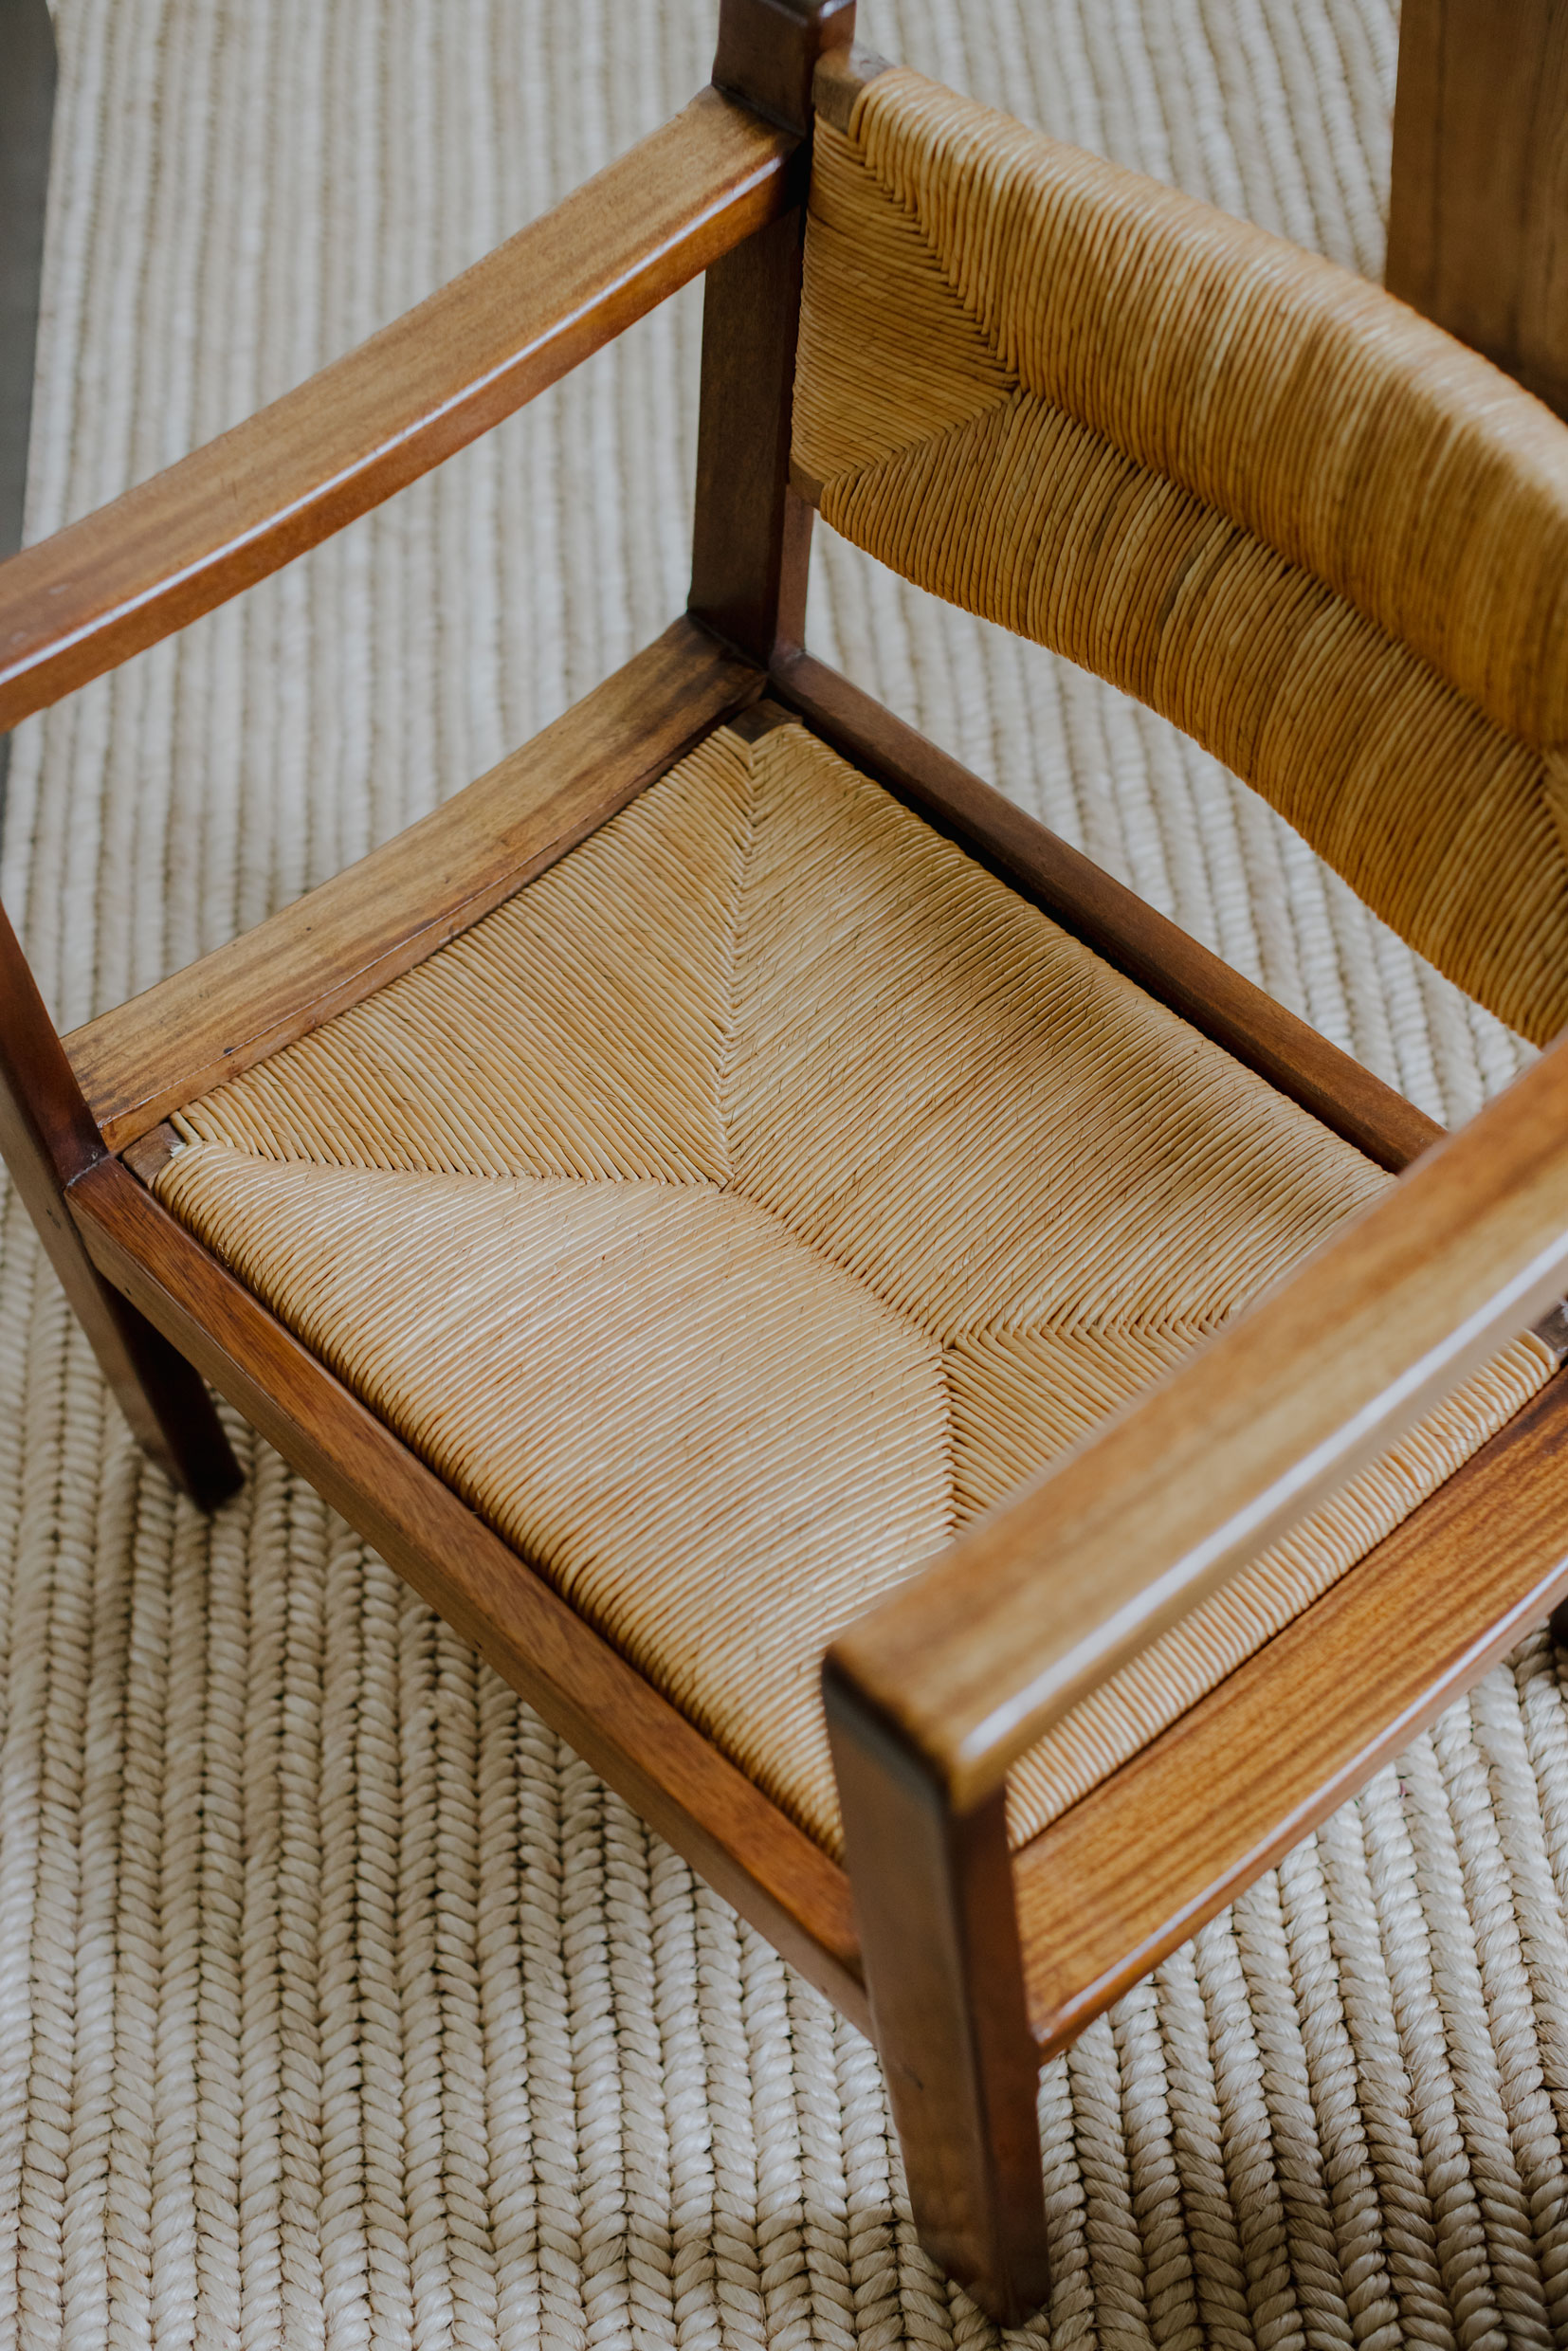 A pair of armchairs by Elizabeth Eyre de Lanux selected by Vincent Van Duysen | Photograph courtesy of Kevin Faingnaert